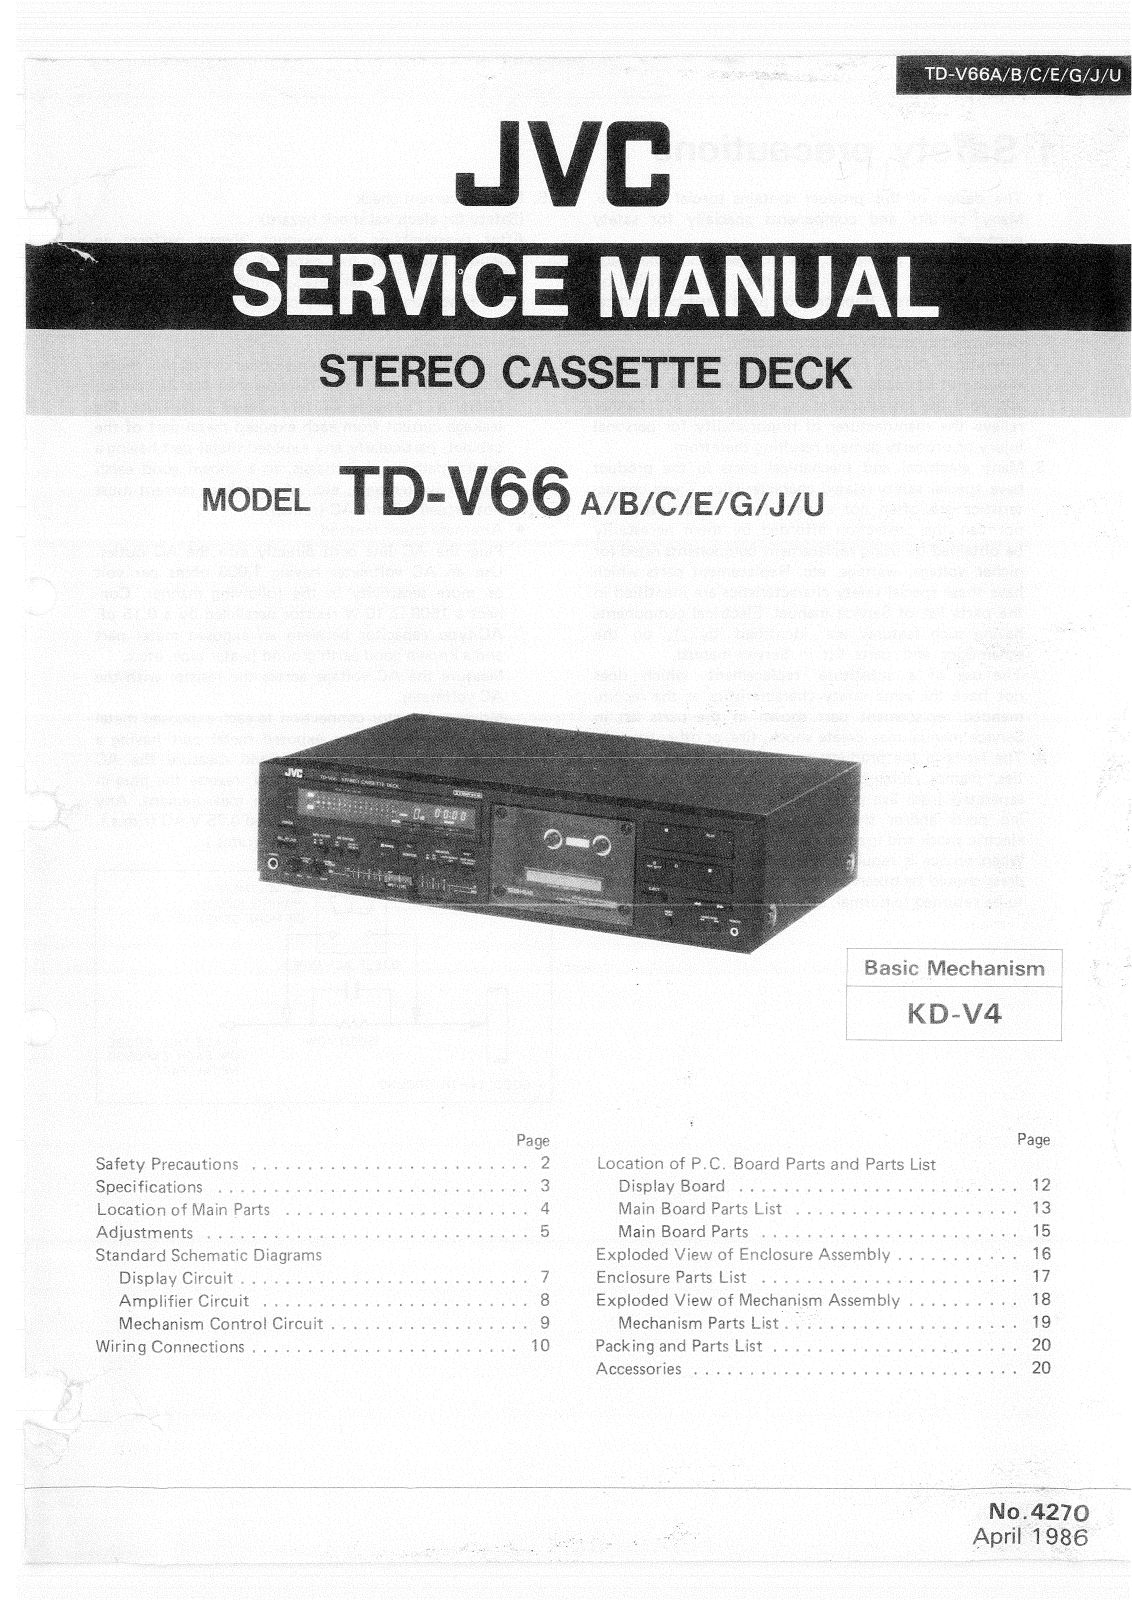 JVC TDV-66 Service manual